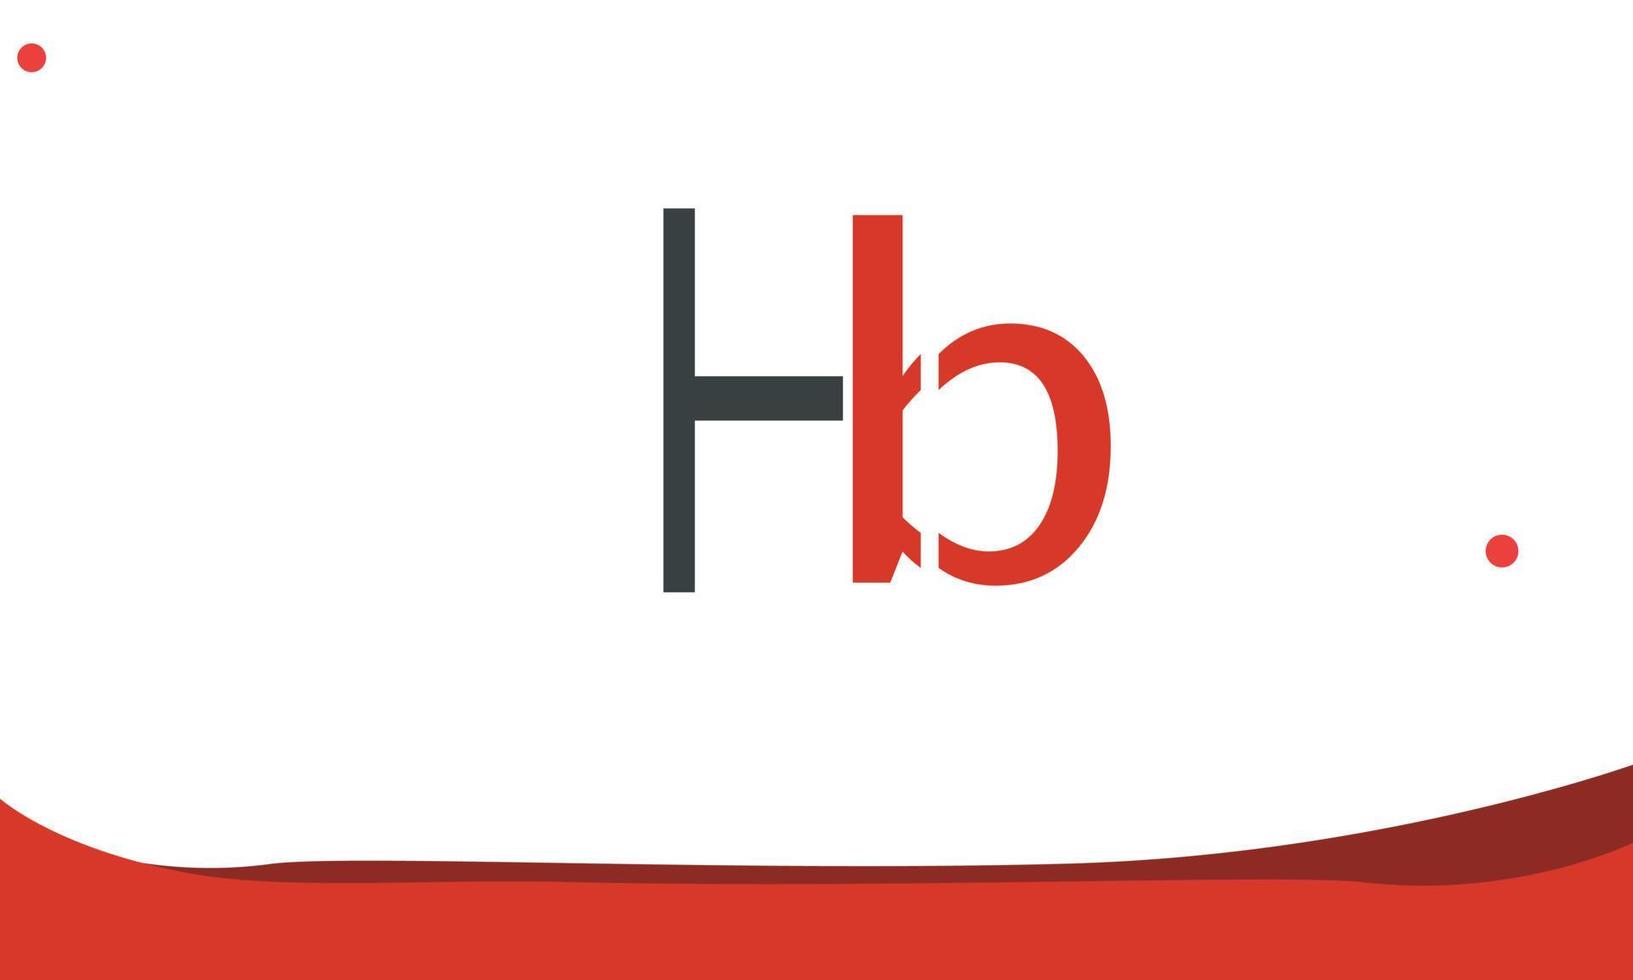 letras do alfabeto iniciais monograma logotipo hb, bh, h e b vetor